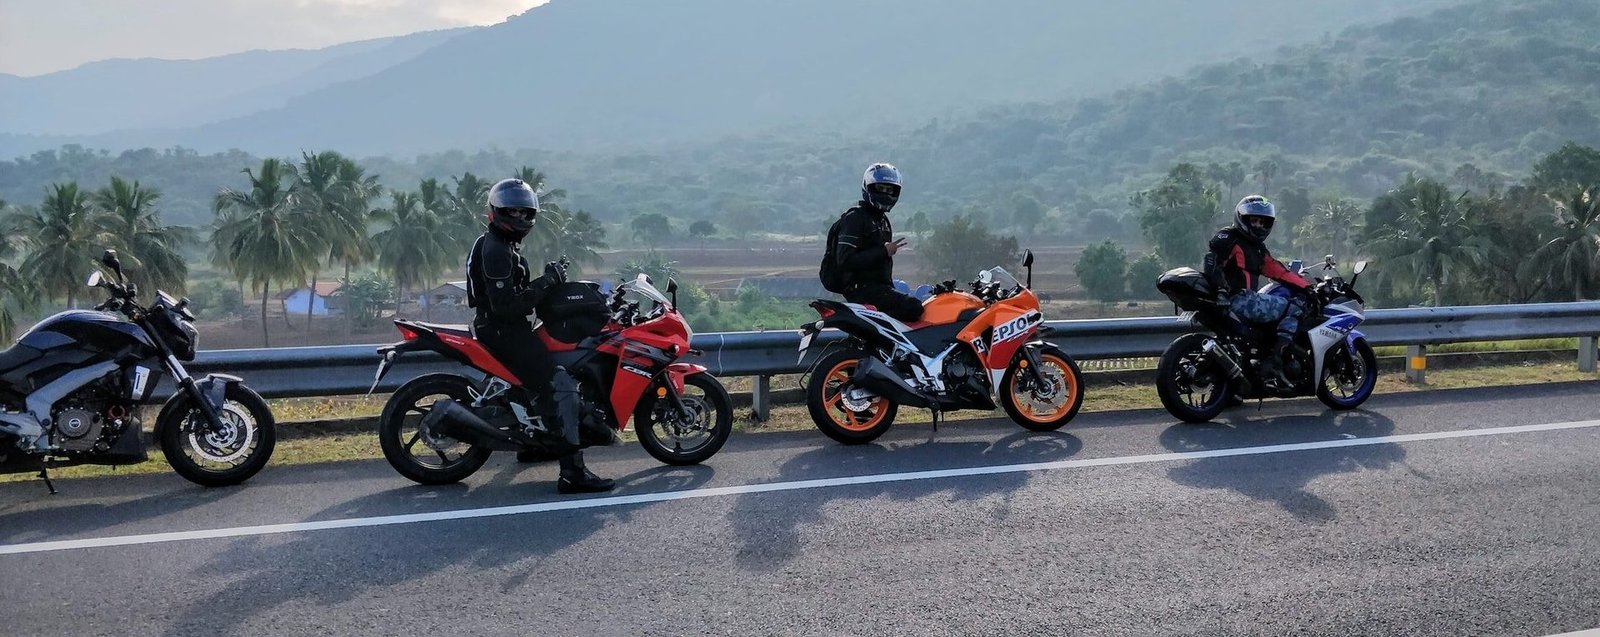 U-COM 7R, Motorcycle intercom, Up to 4 bikers